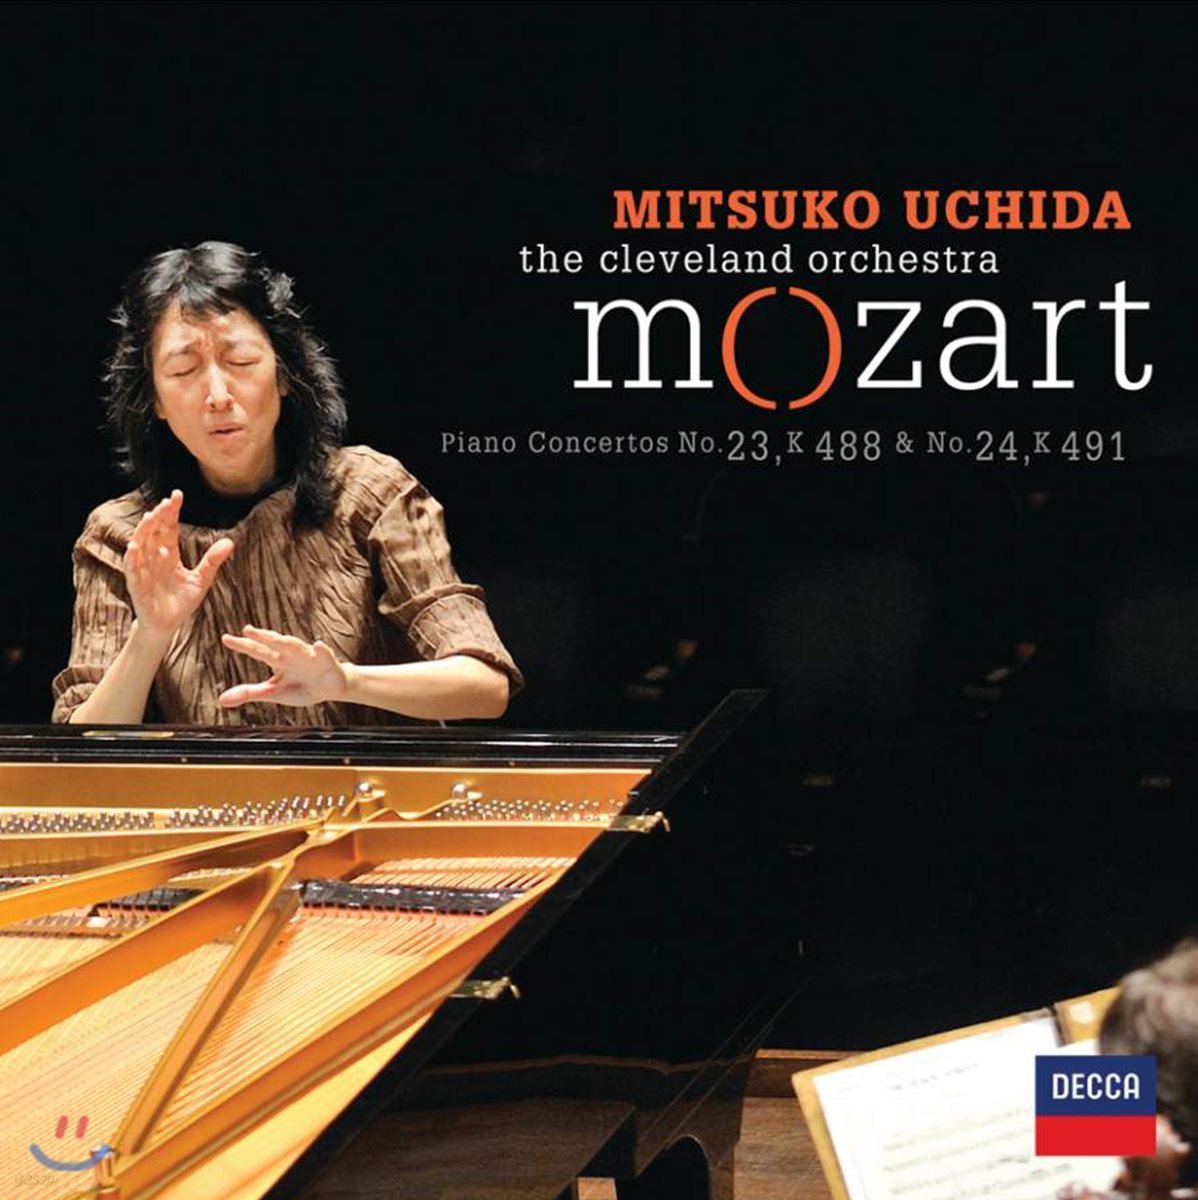 Mitsuko Uchida 모차르트: 피아노 협주곡 23, 24번 (Mozart: Piano Concertos K491, 488)